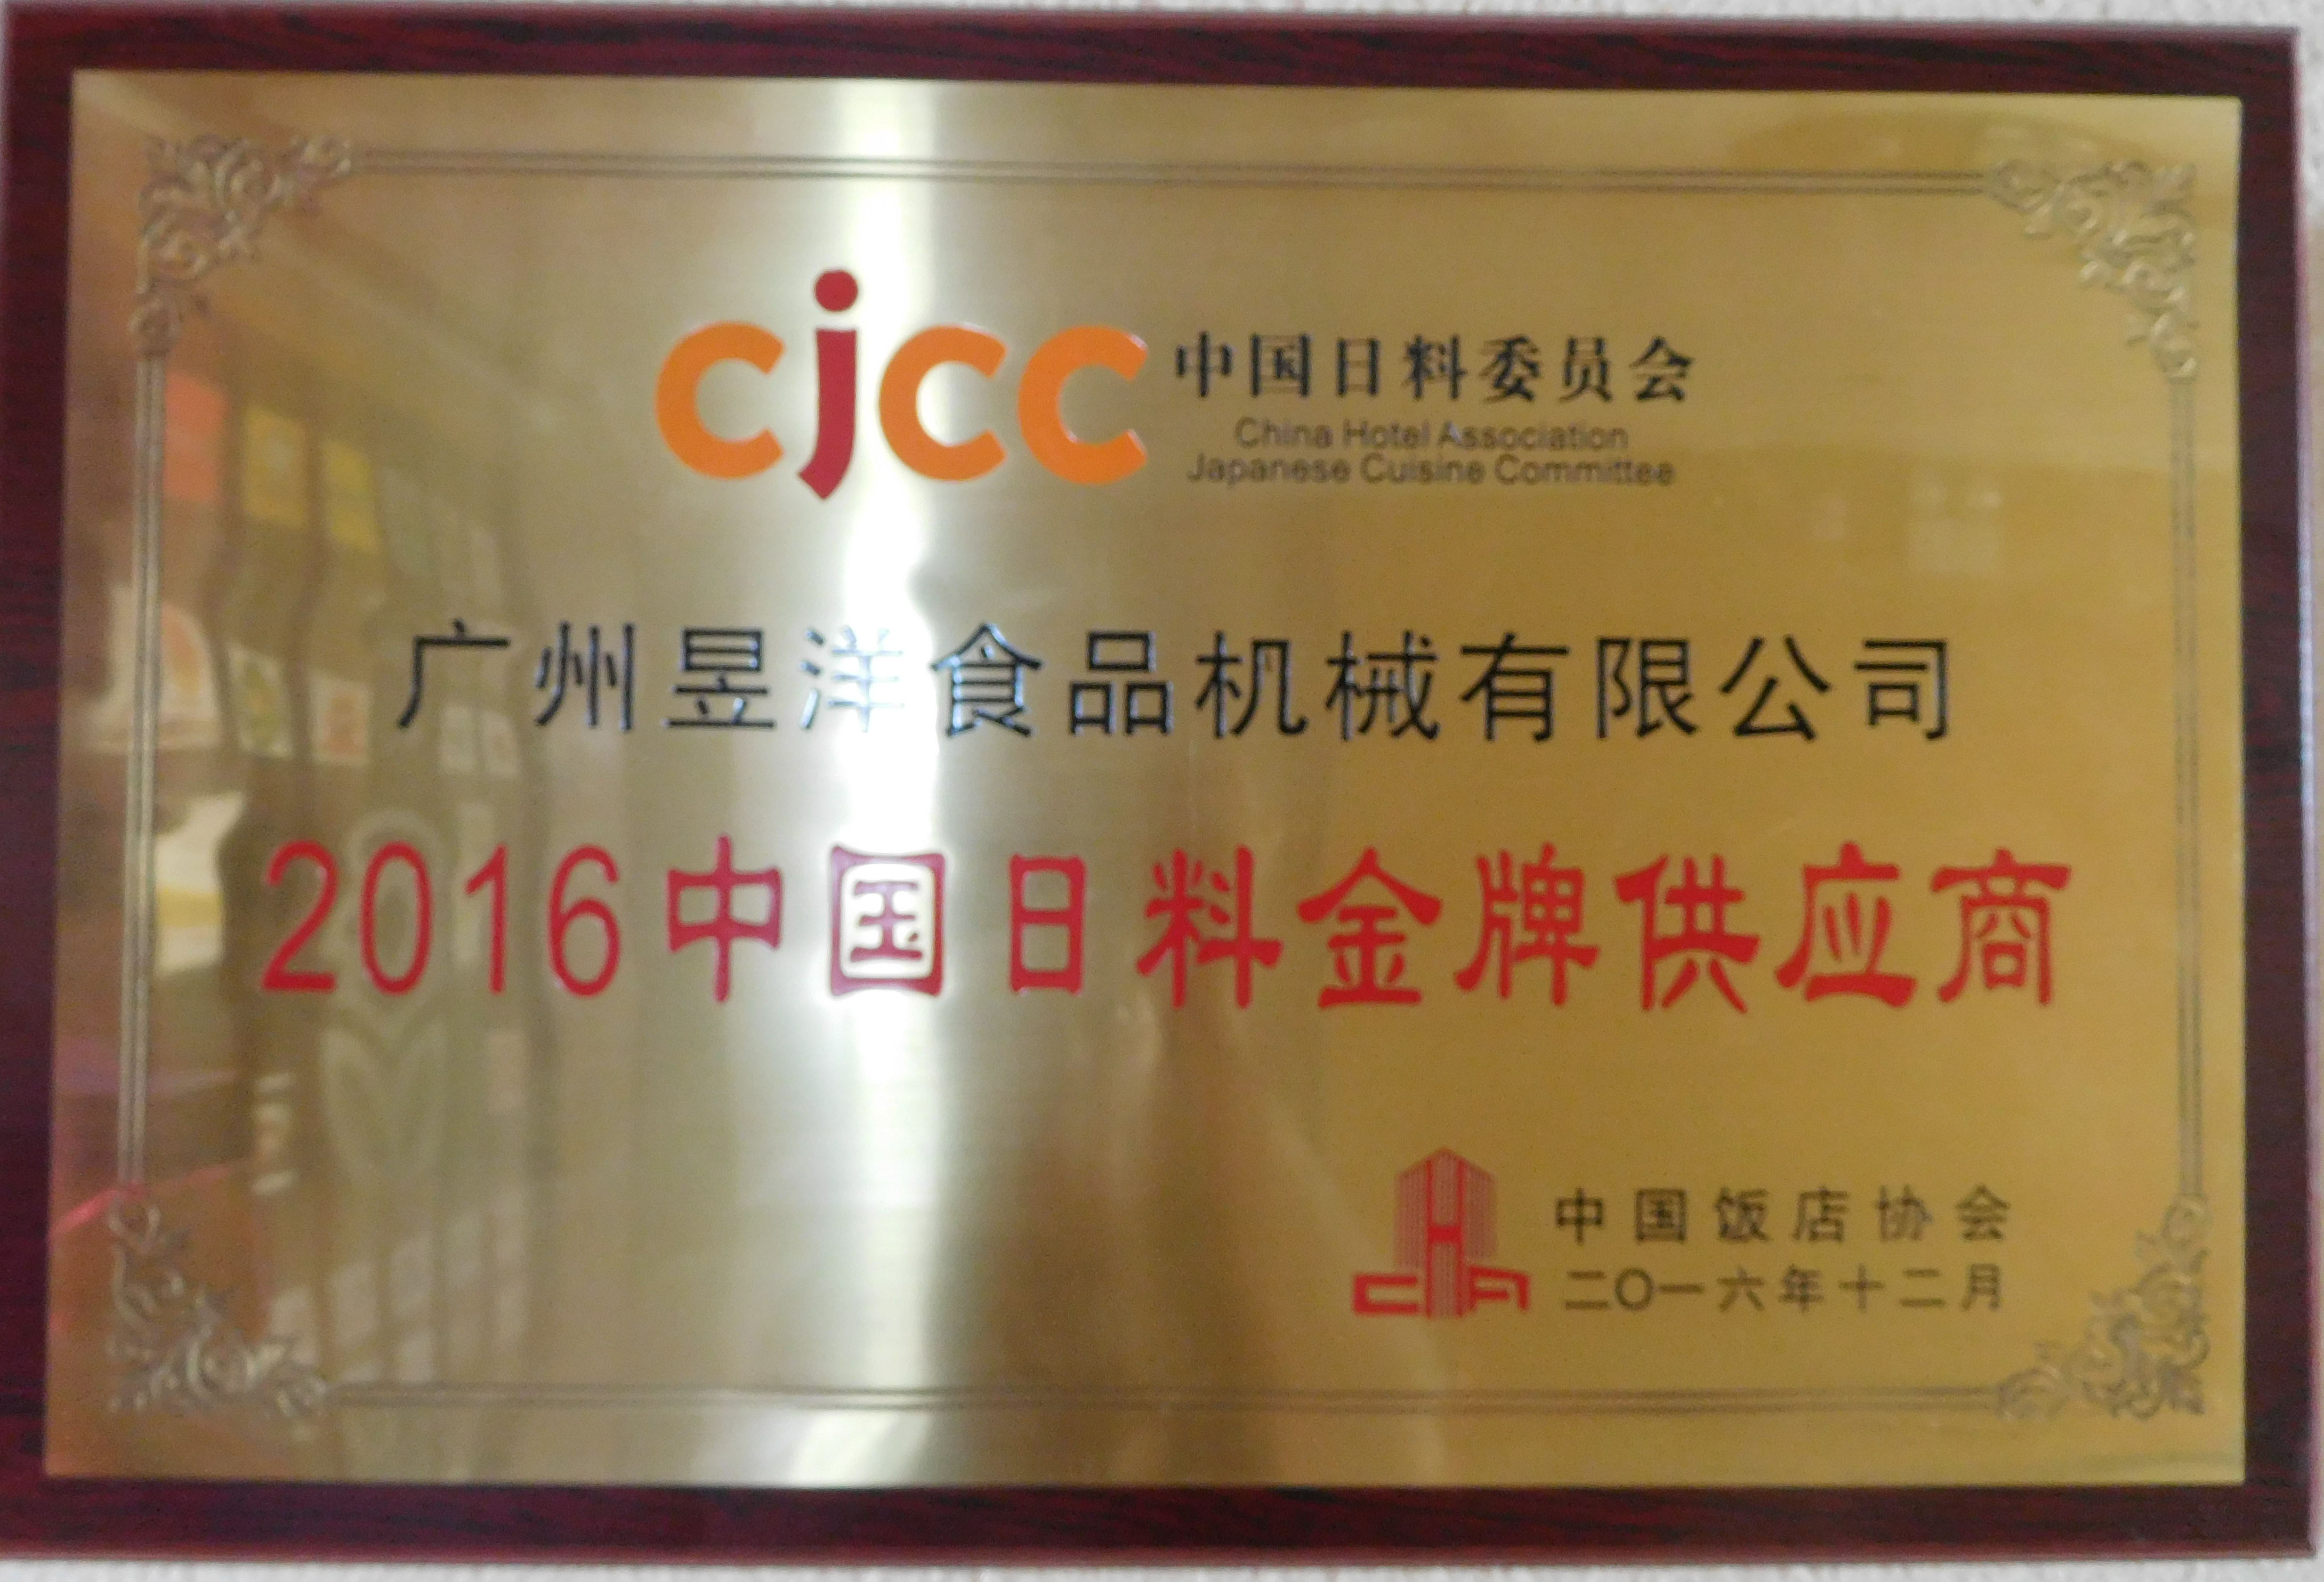 CJCC中国日料委员会优质供应商